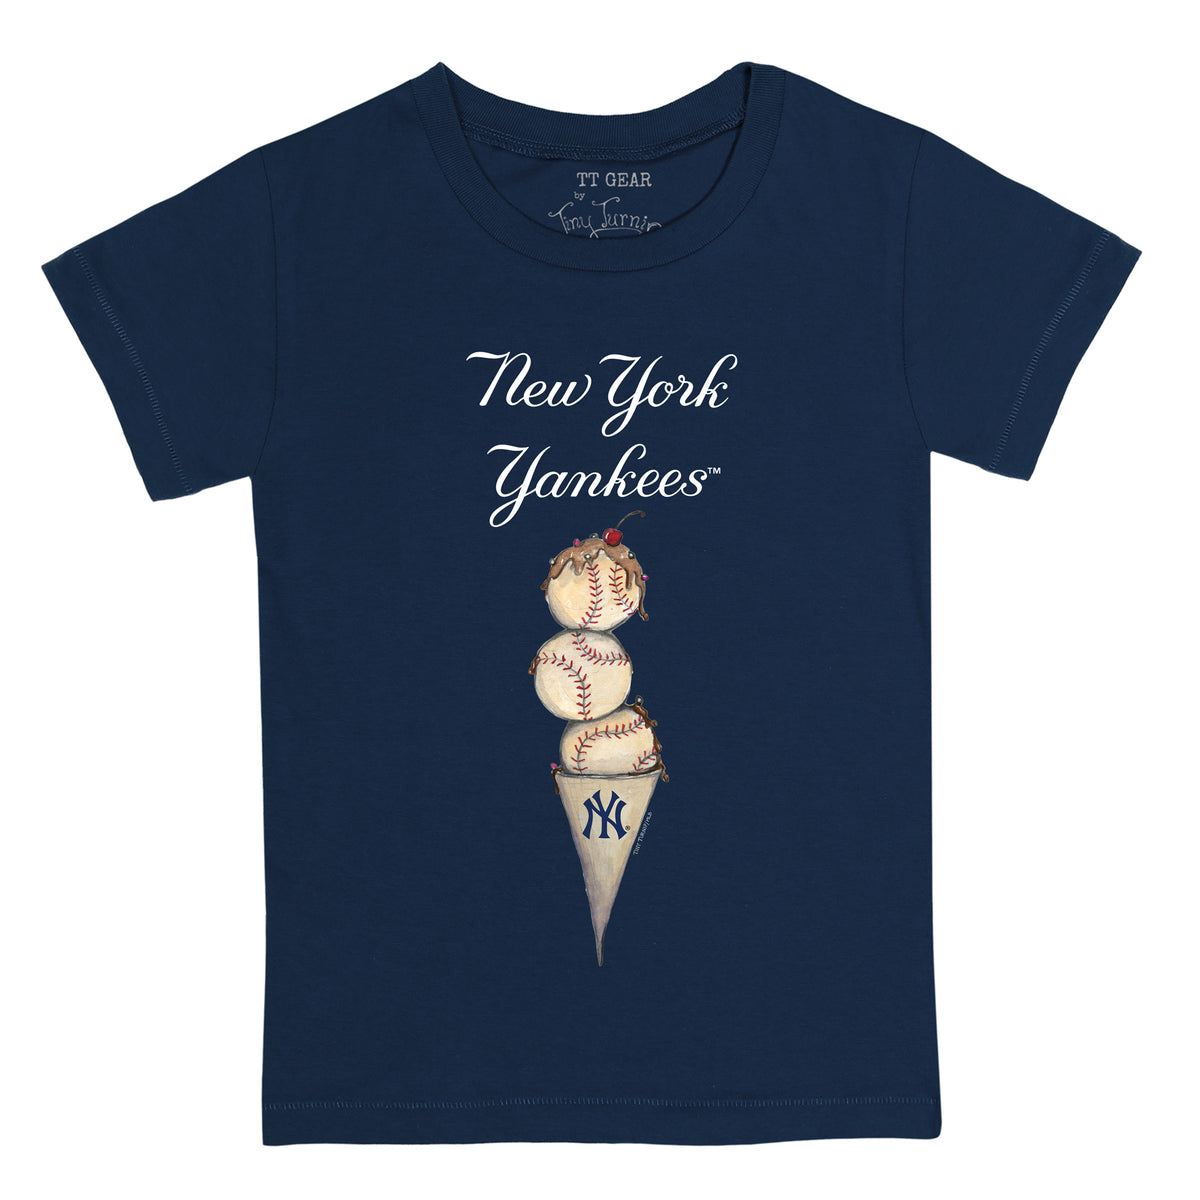 New York Yankees Kids Apparel, Yankees Youth Jerseys, Kids Shirts, Clothing